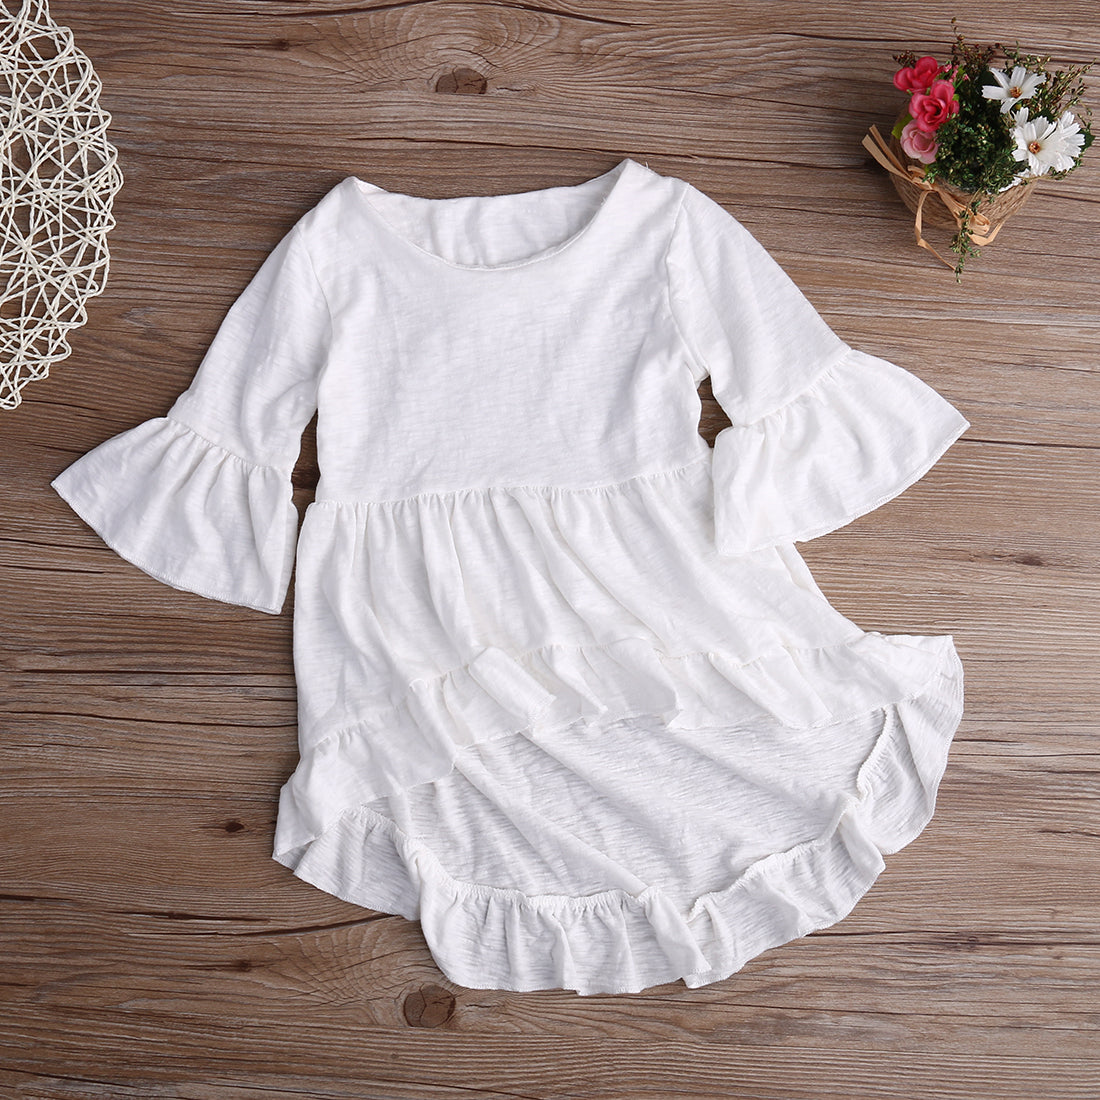 White Baby Girls Dress Frills Flare Sleeve Top T-Shirt Party Ruffles Hem Dresses 1-6Y - ebowsos